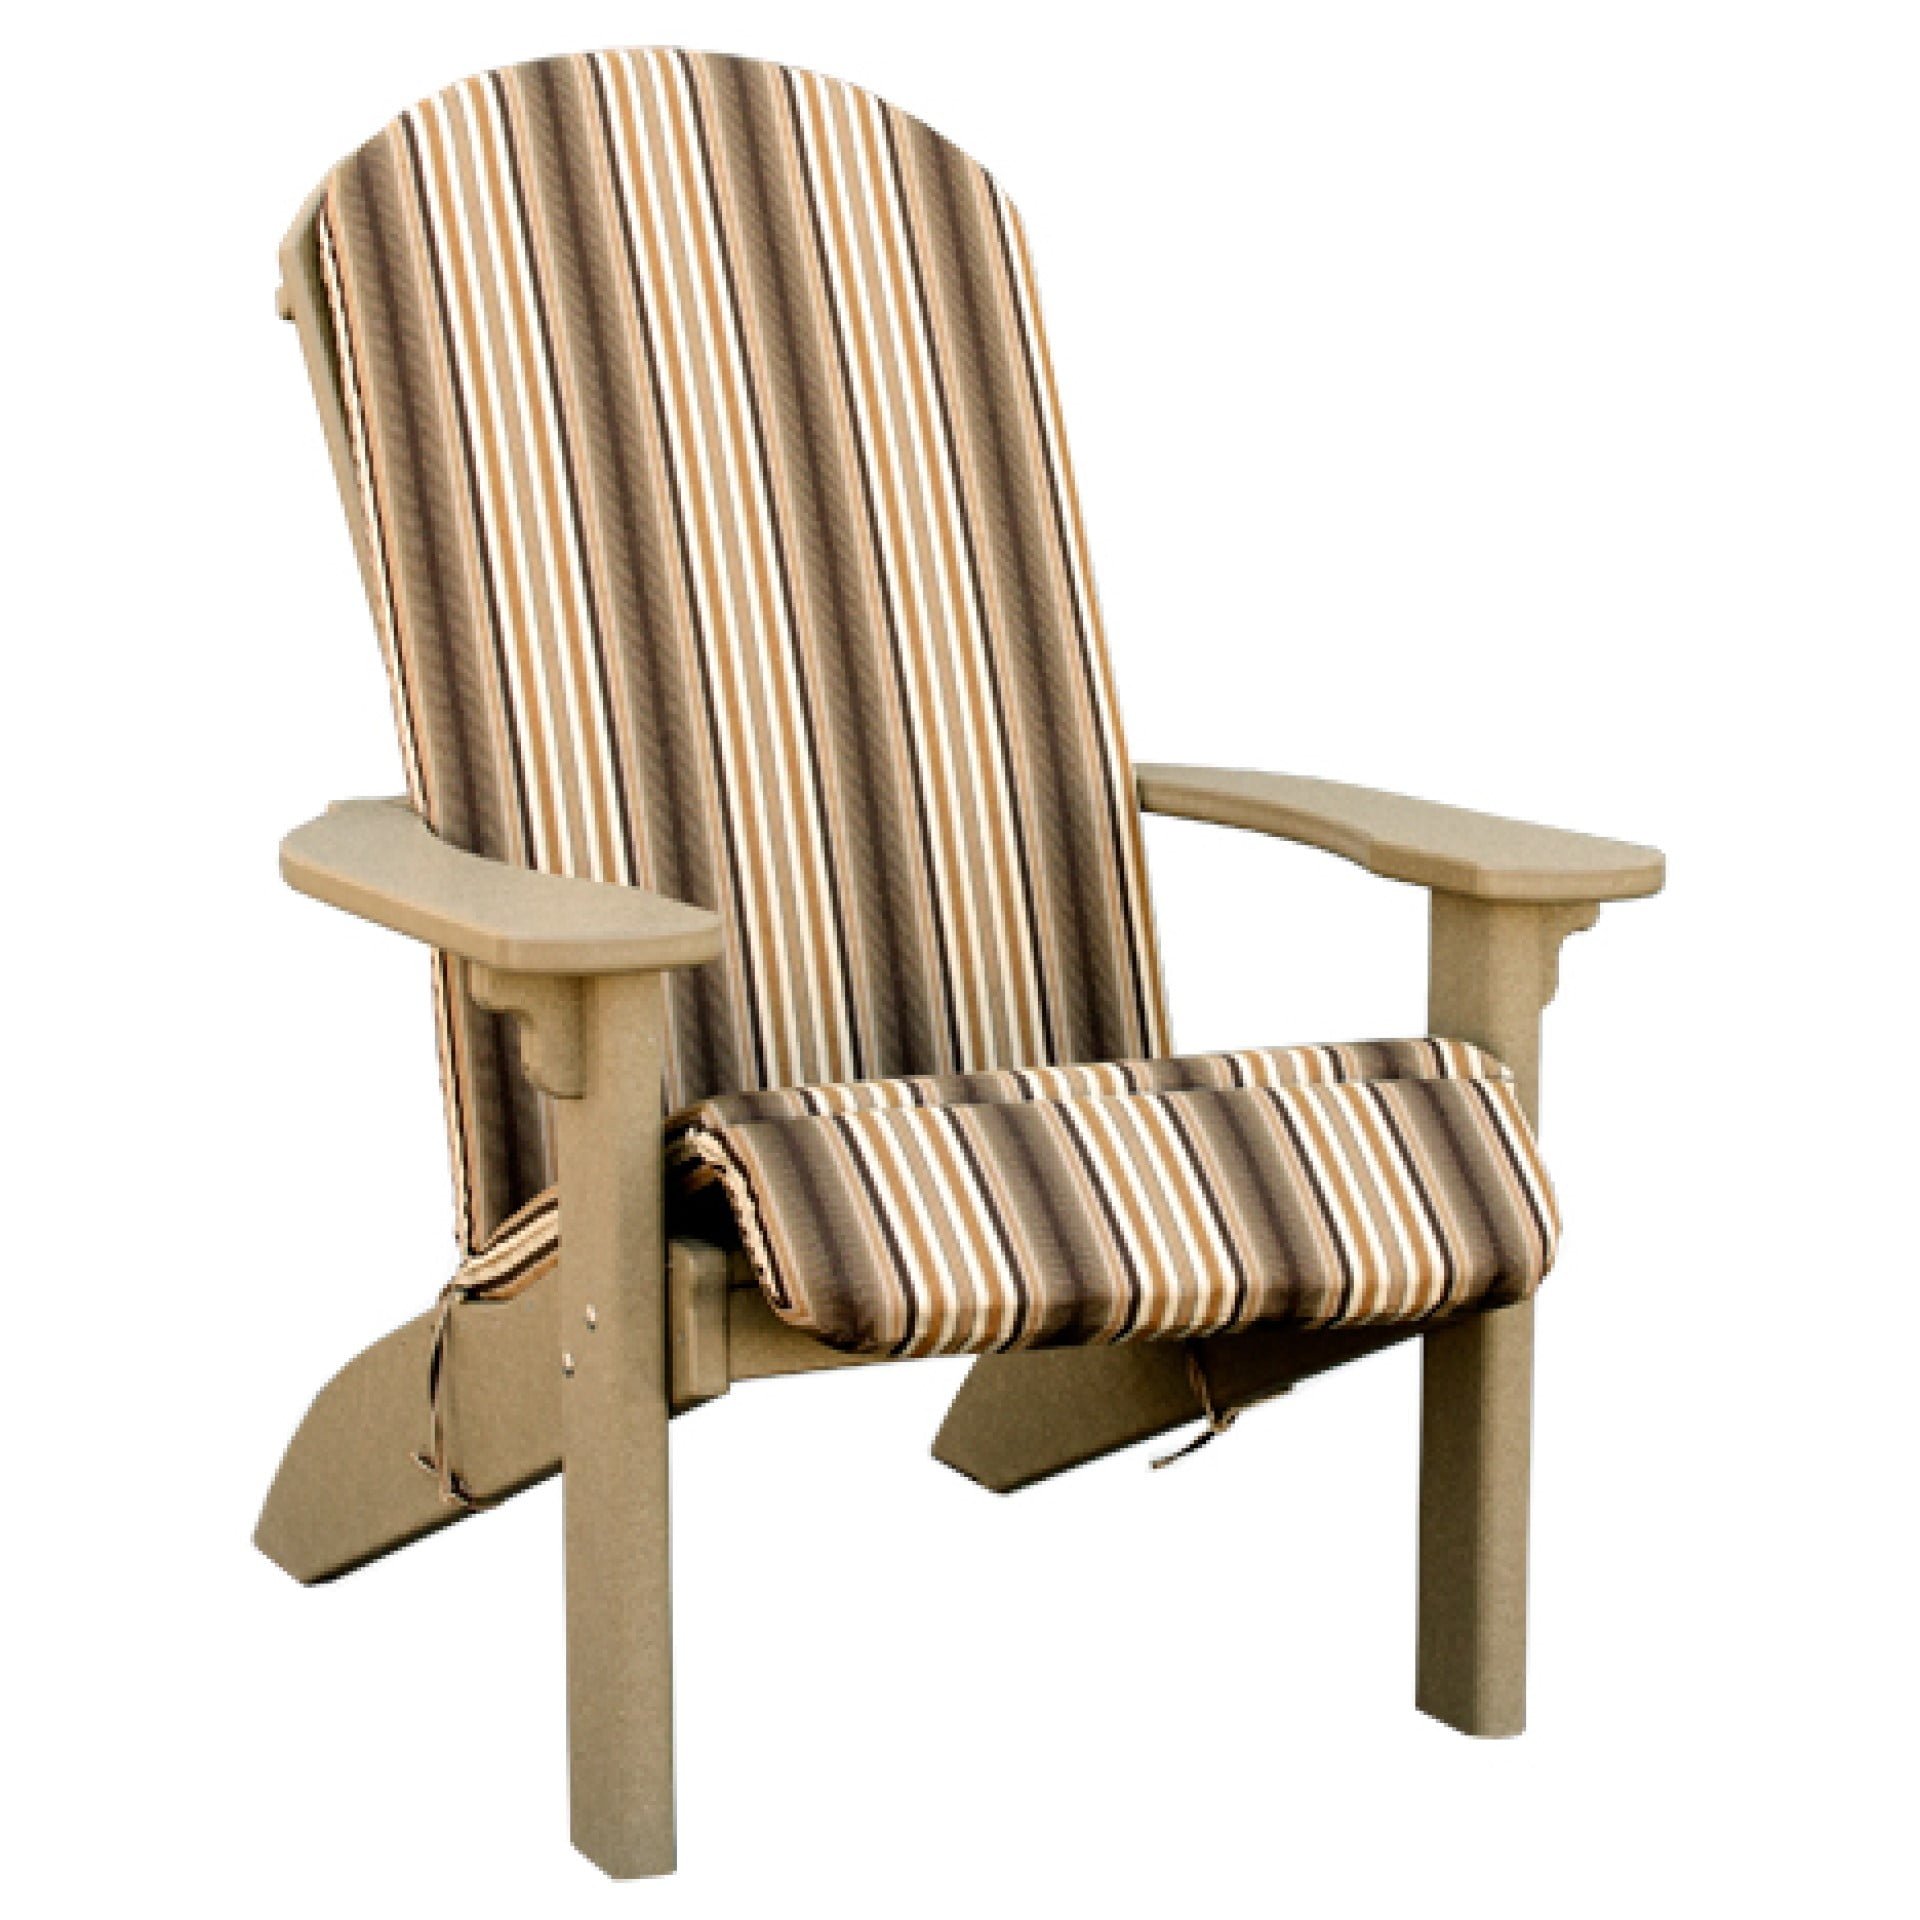 Finch SeaAira Adirondack Chair Seat and Back Cushion